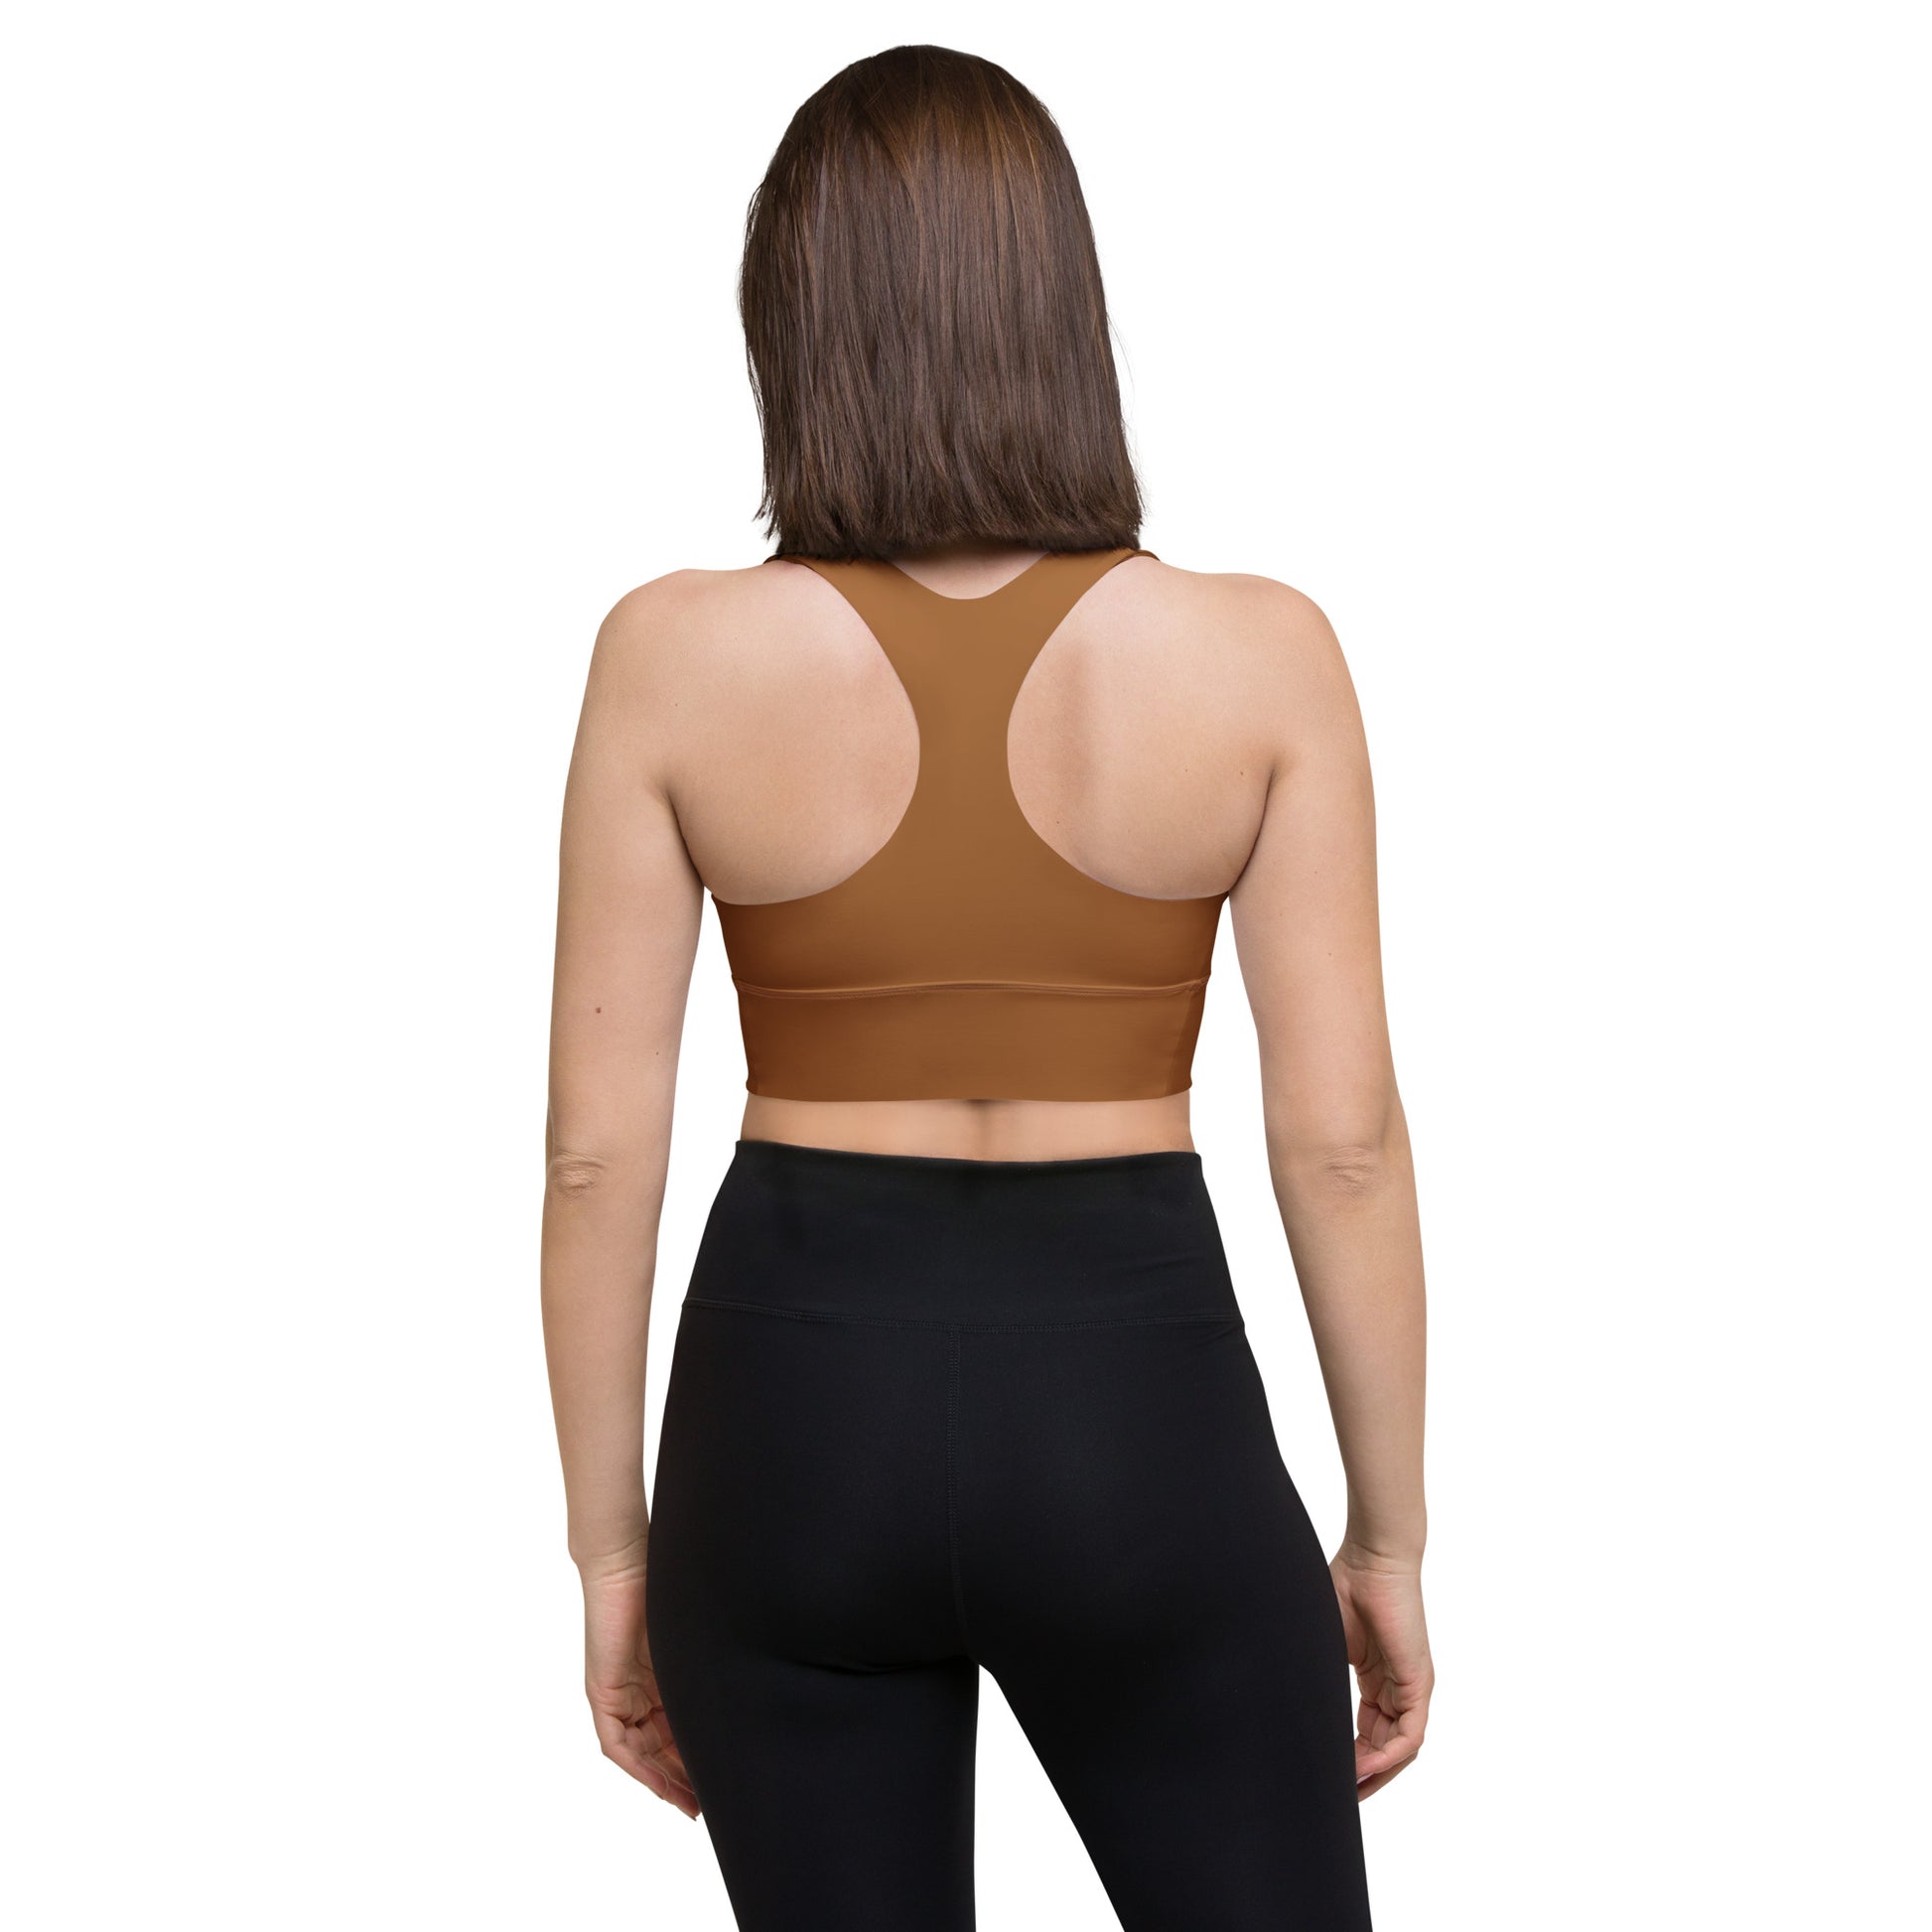  Rich Gold Longline sports bra by Long-line Women's High Impact Sports Bra sold by Jain Yoga